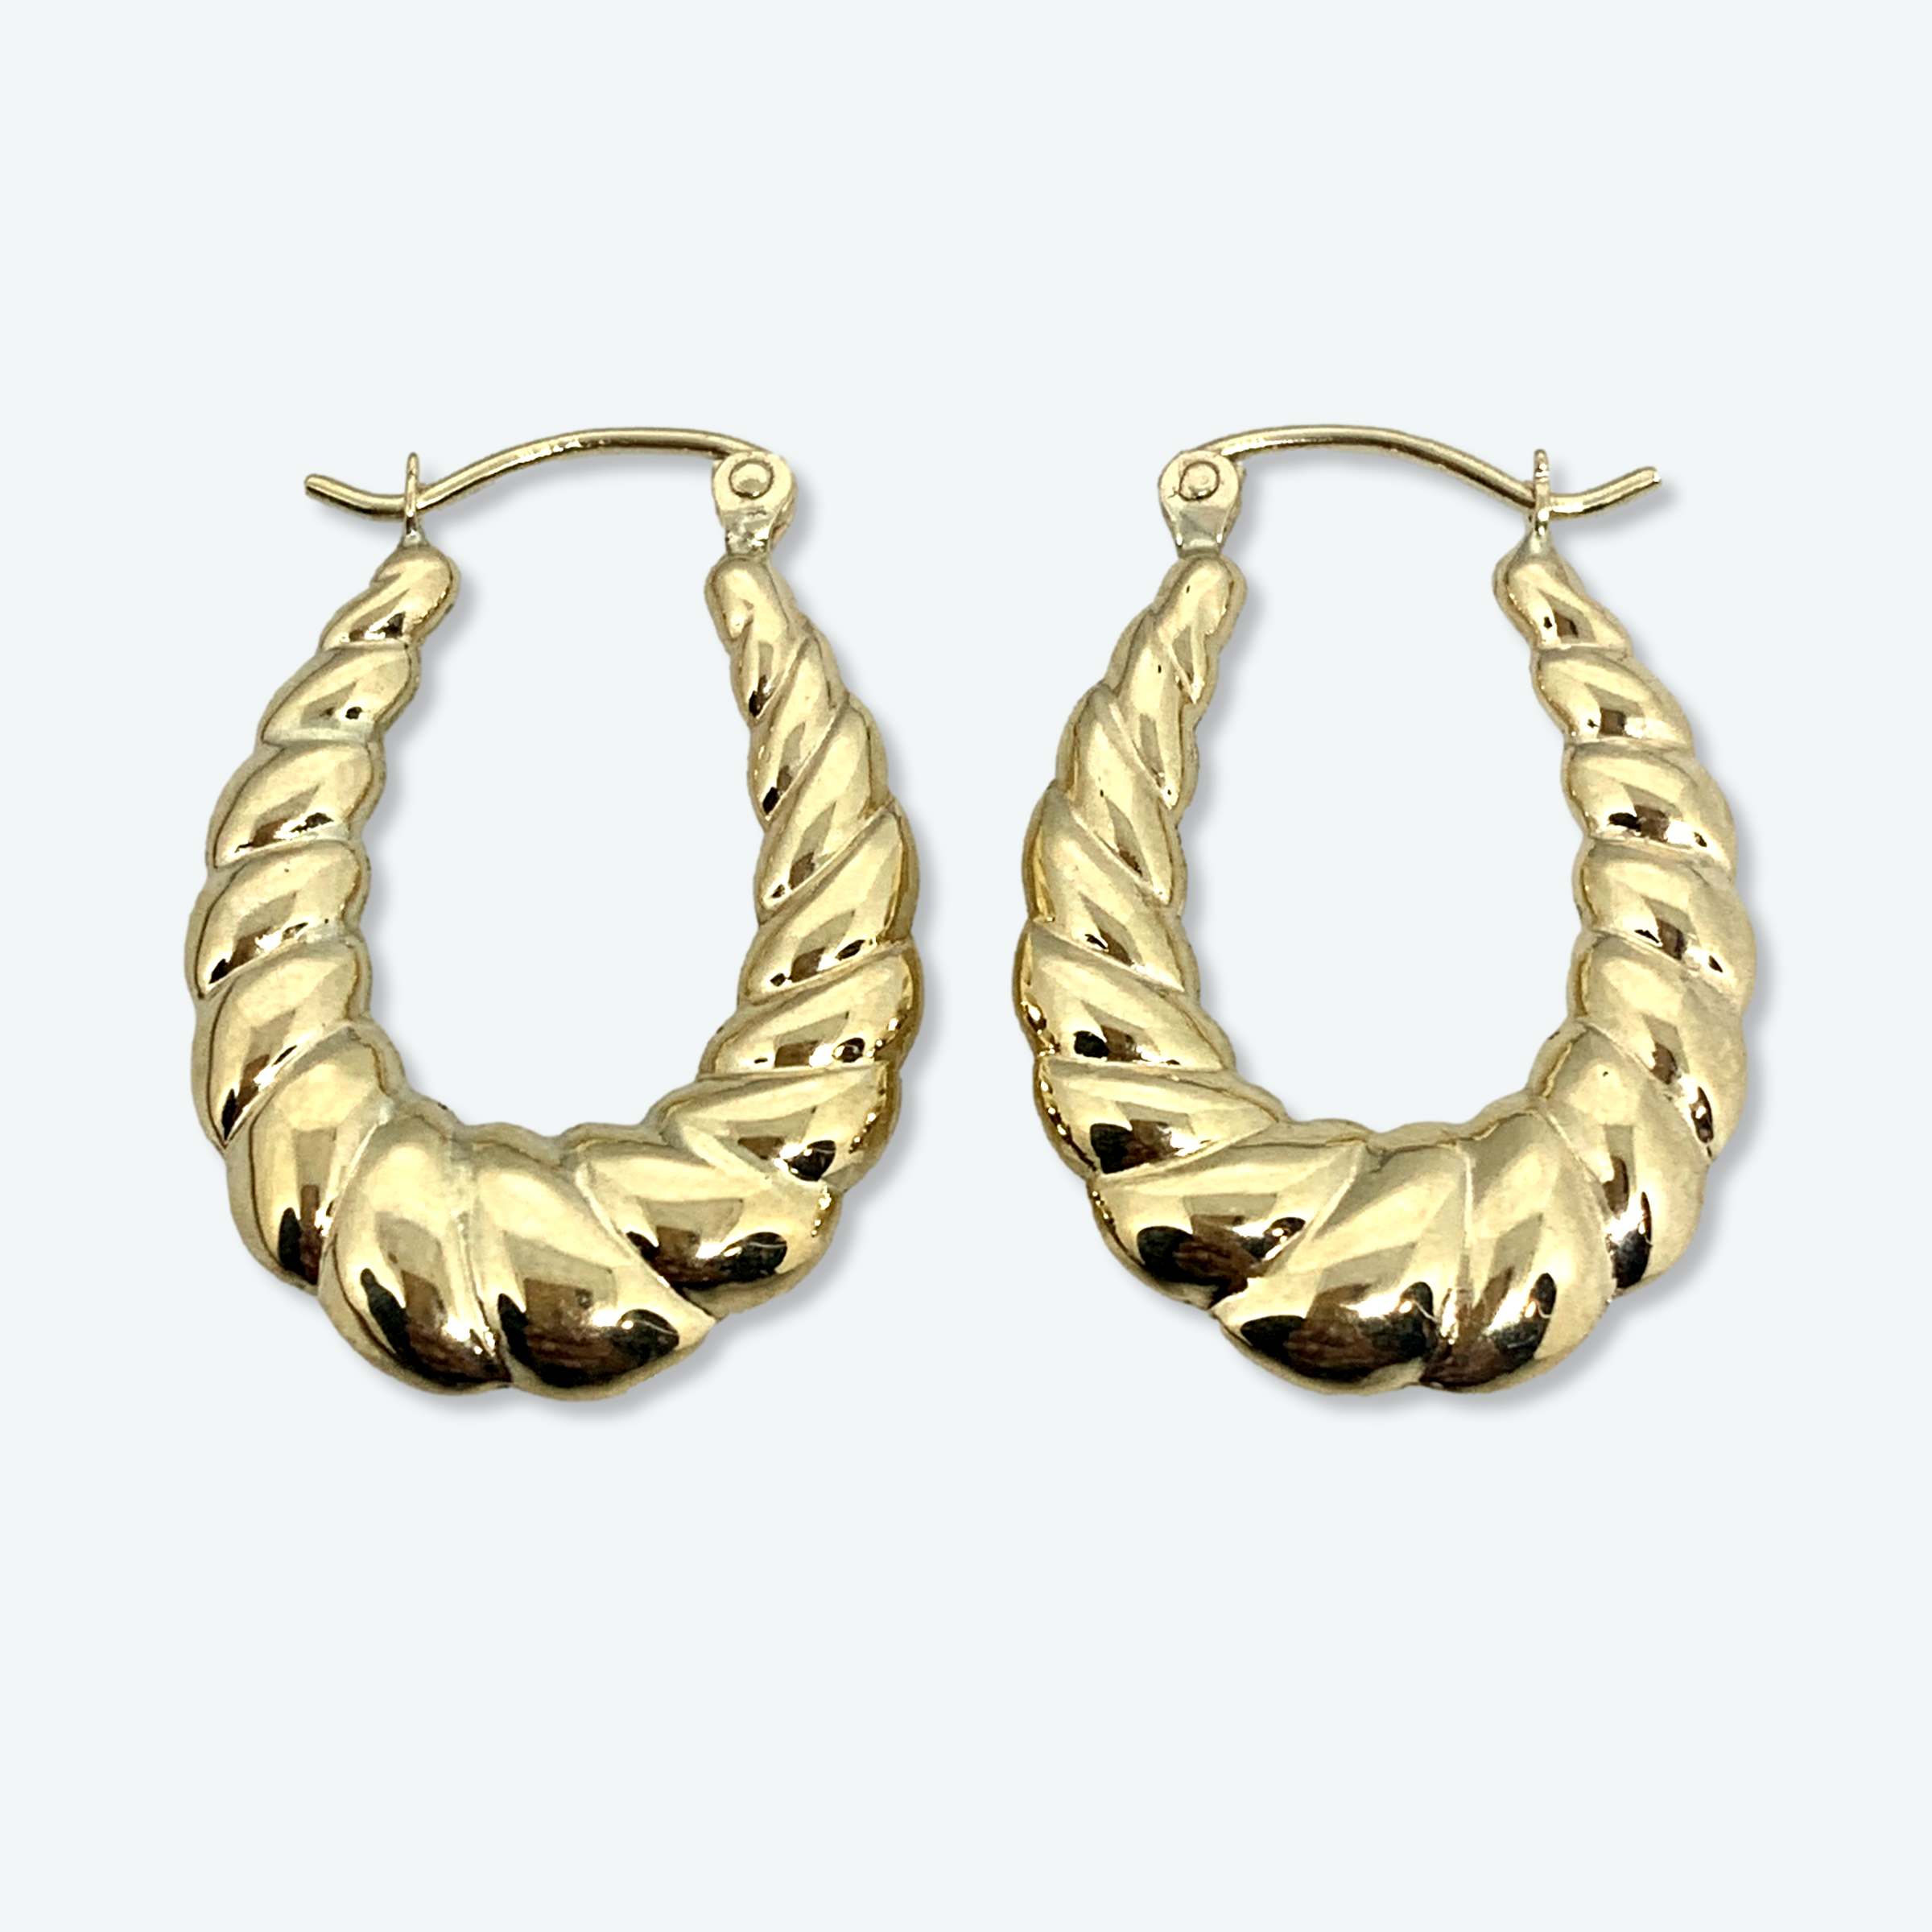 10K Yellow Gold 1” Twisted Oval Hoop Earrings